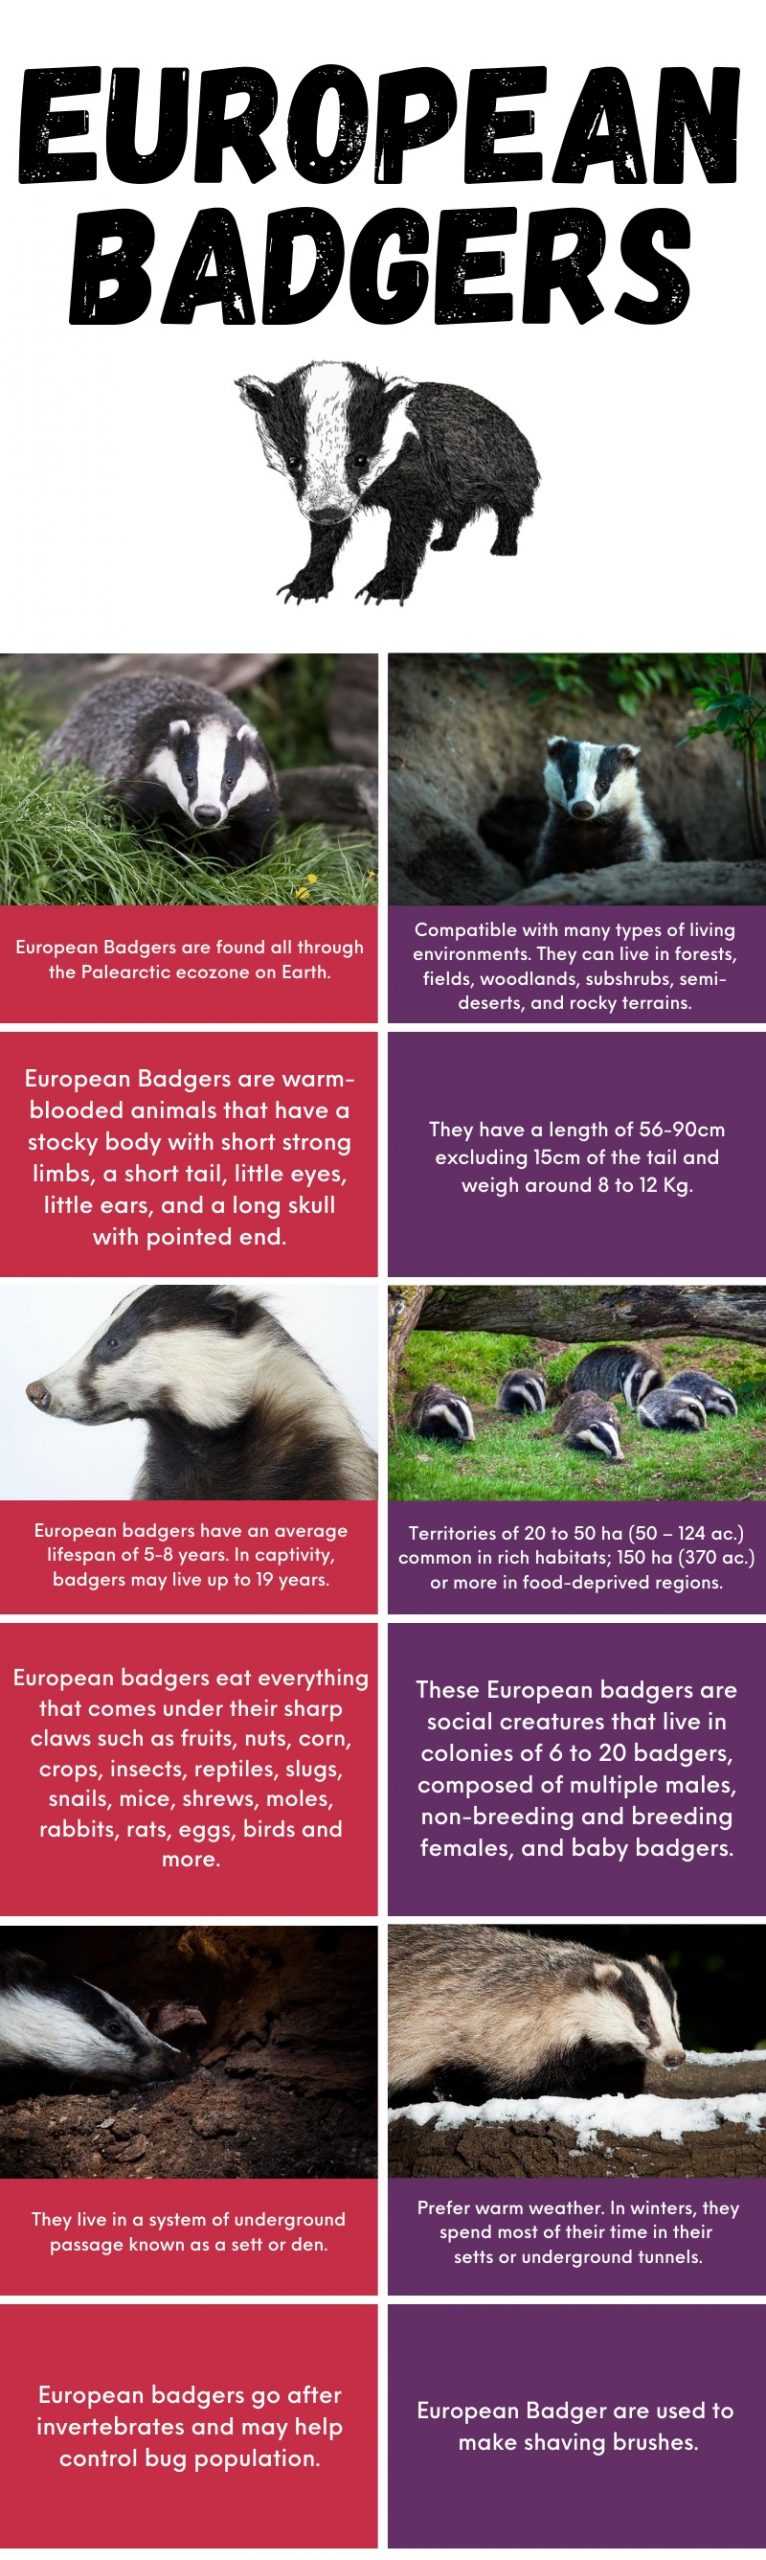 European Badger Information